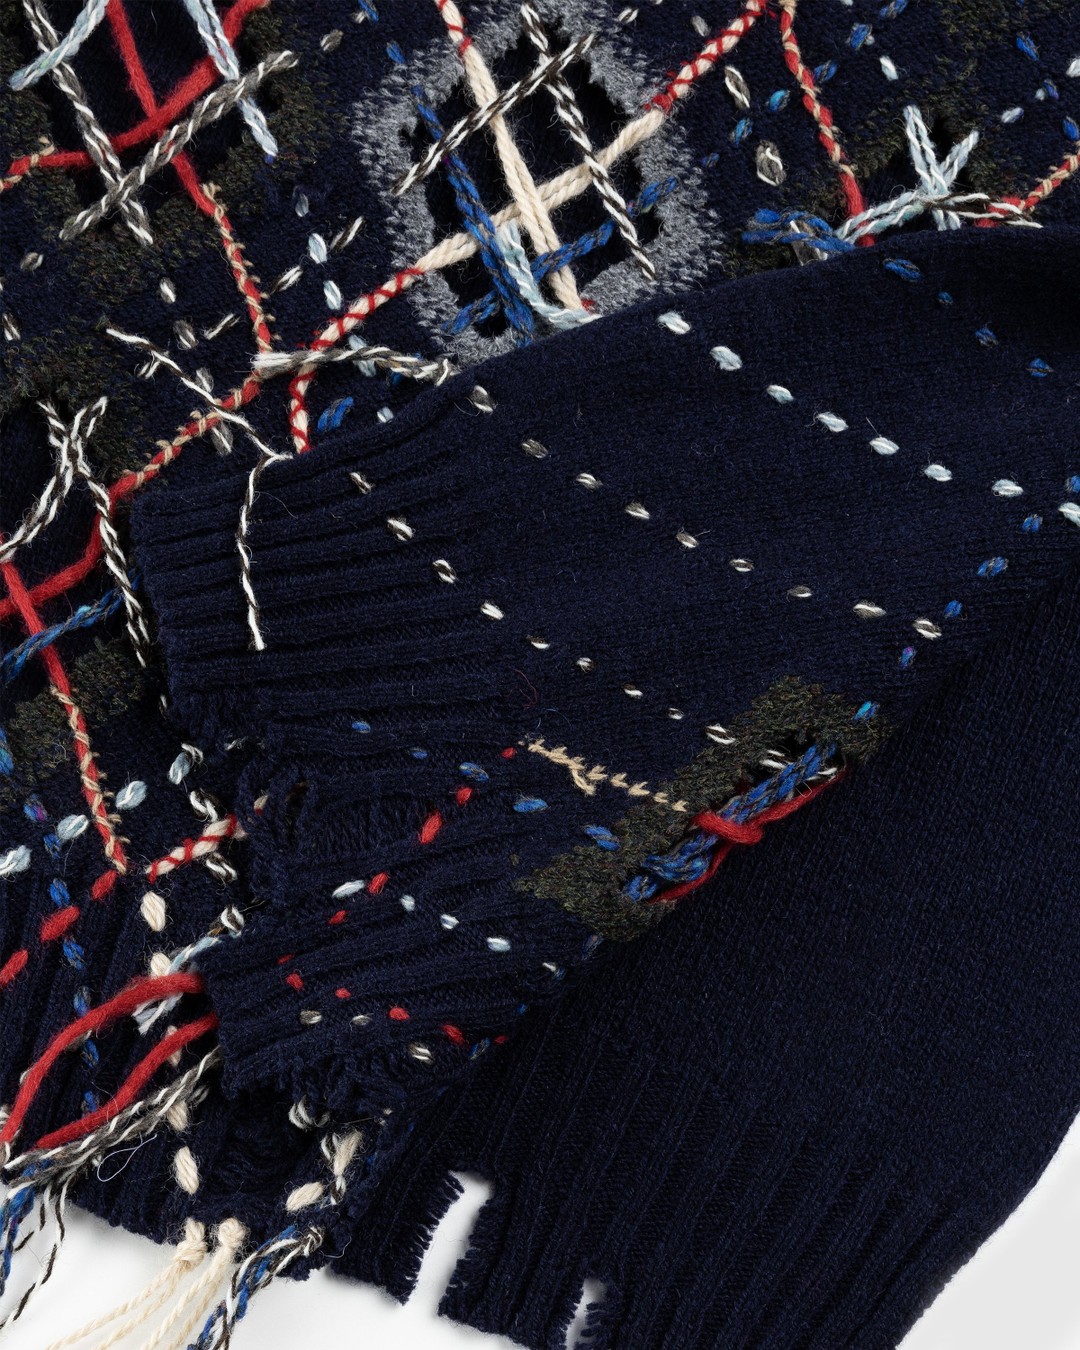 Maison Margiela – Distressed Wool Crewneck Sweater Multi - Sweats - Multi - Image 5